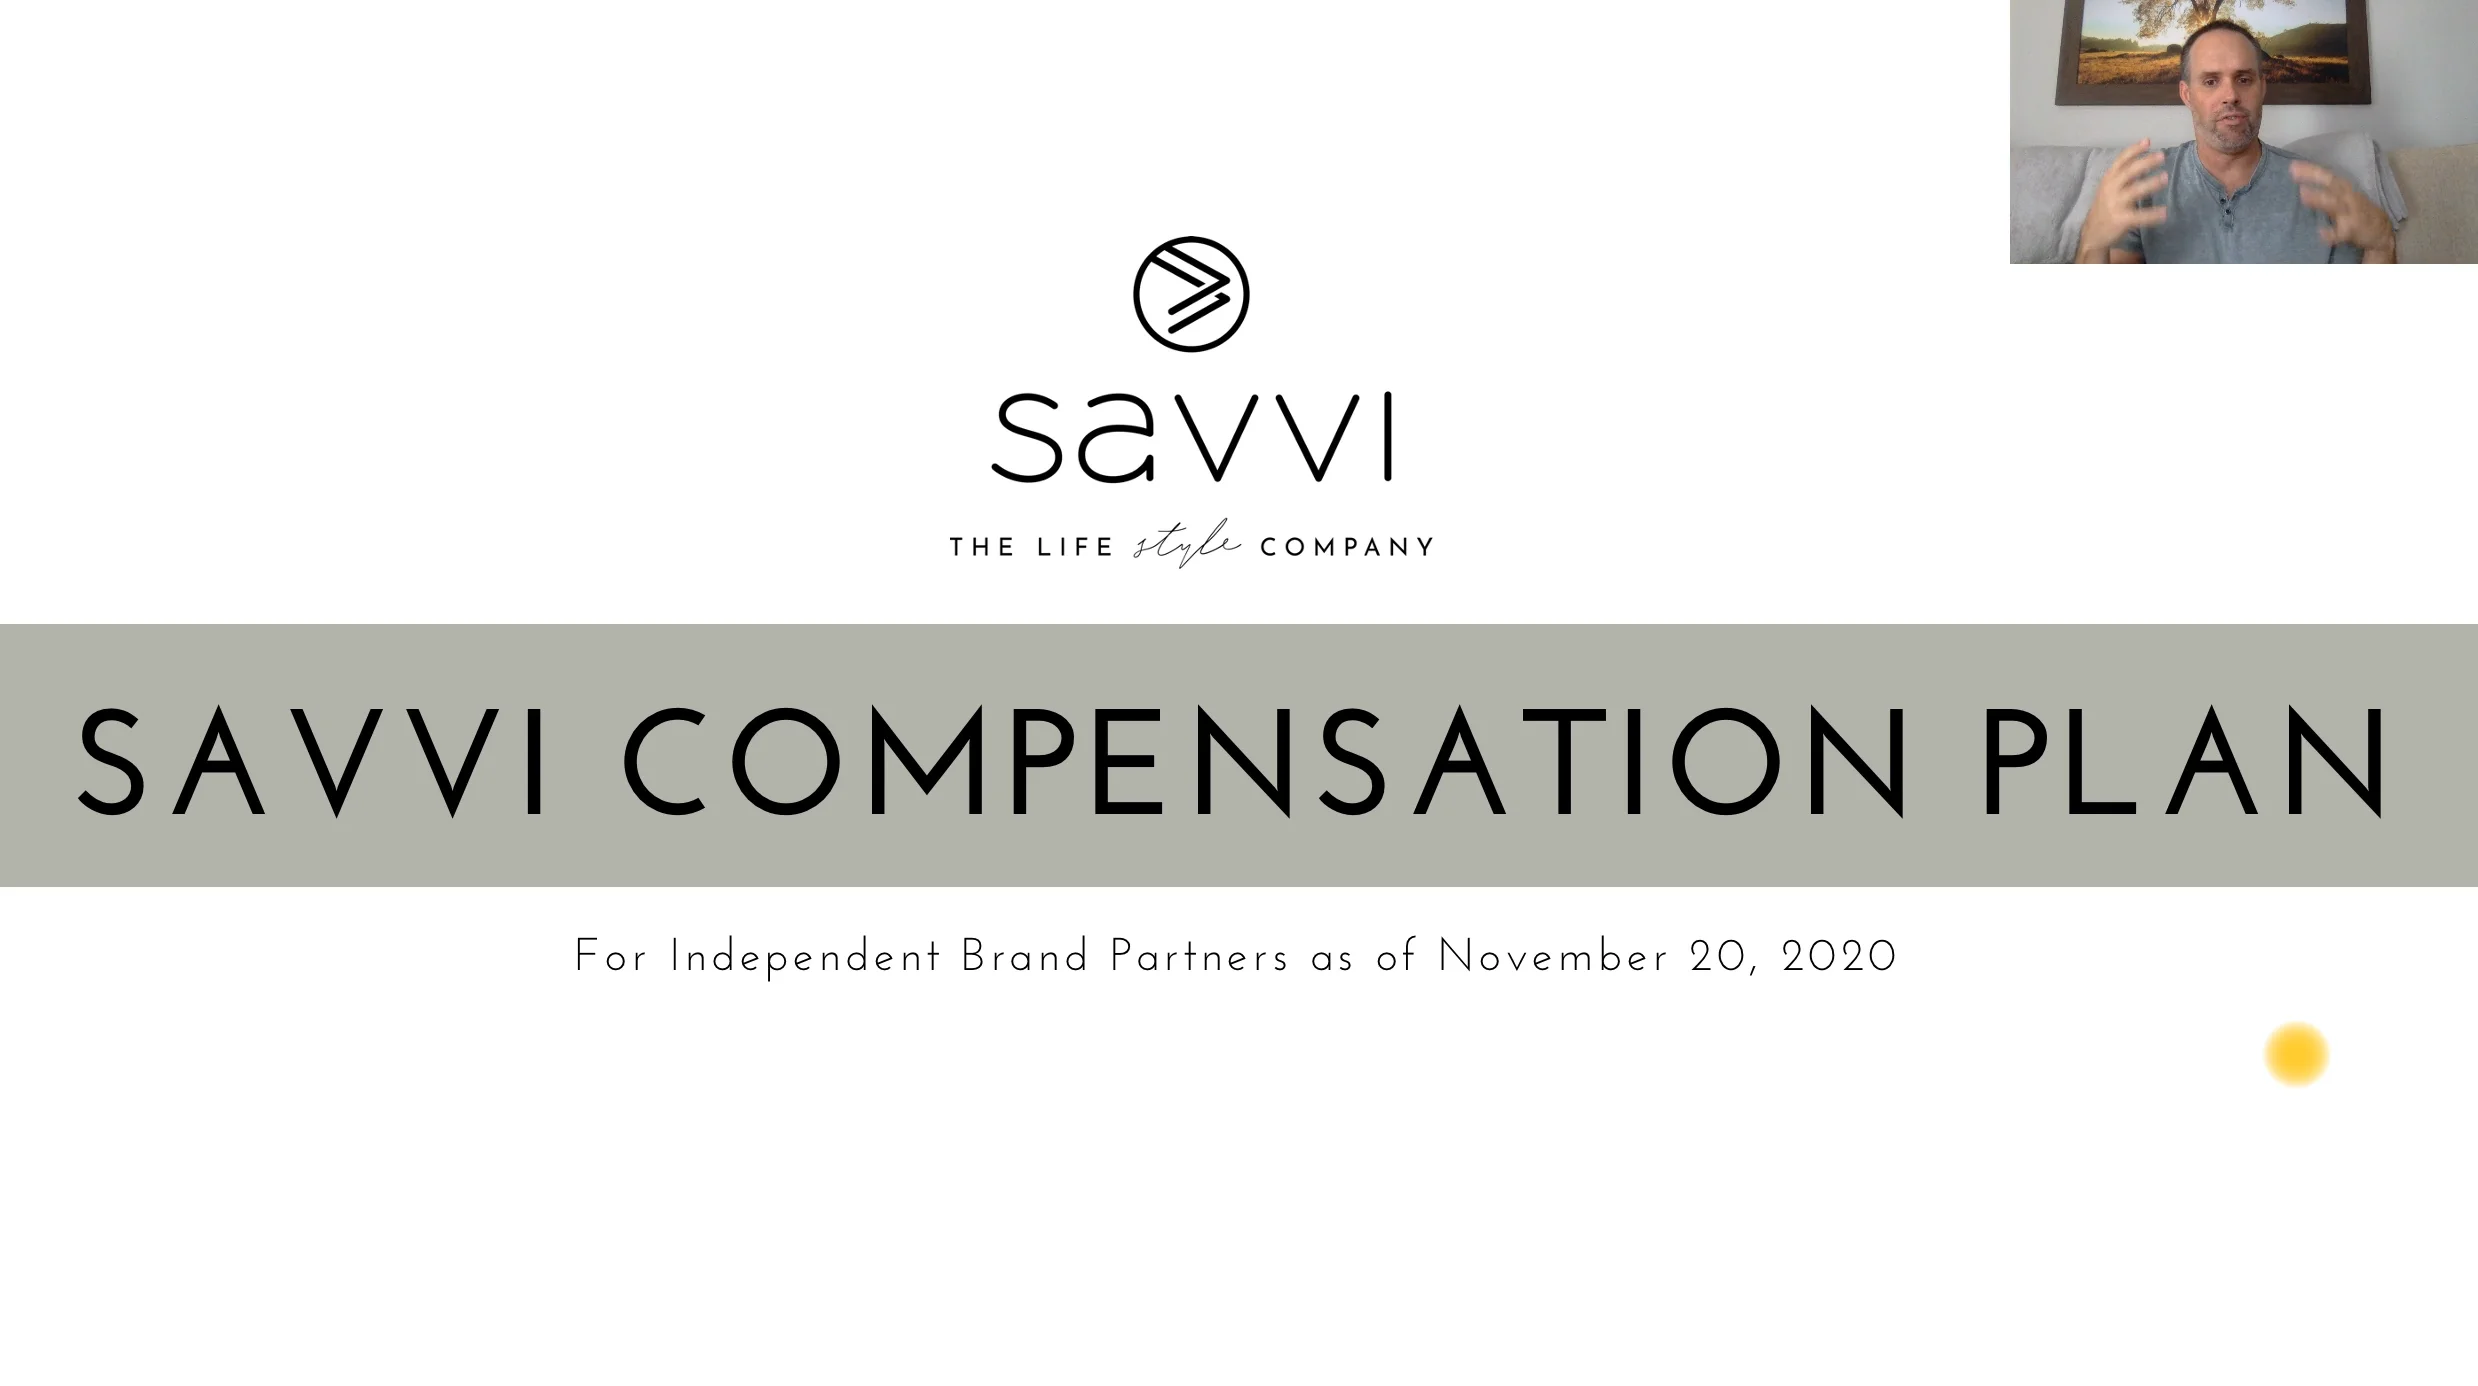 Savvi Compensation Plan Overview (as of November 20, 2020) on Vimeo